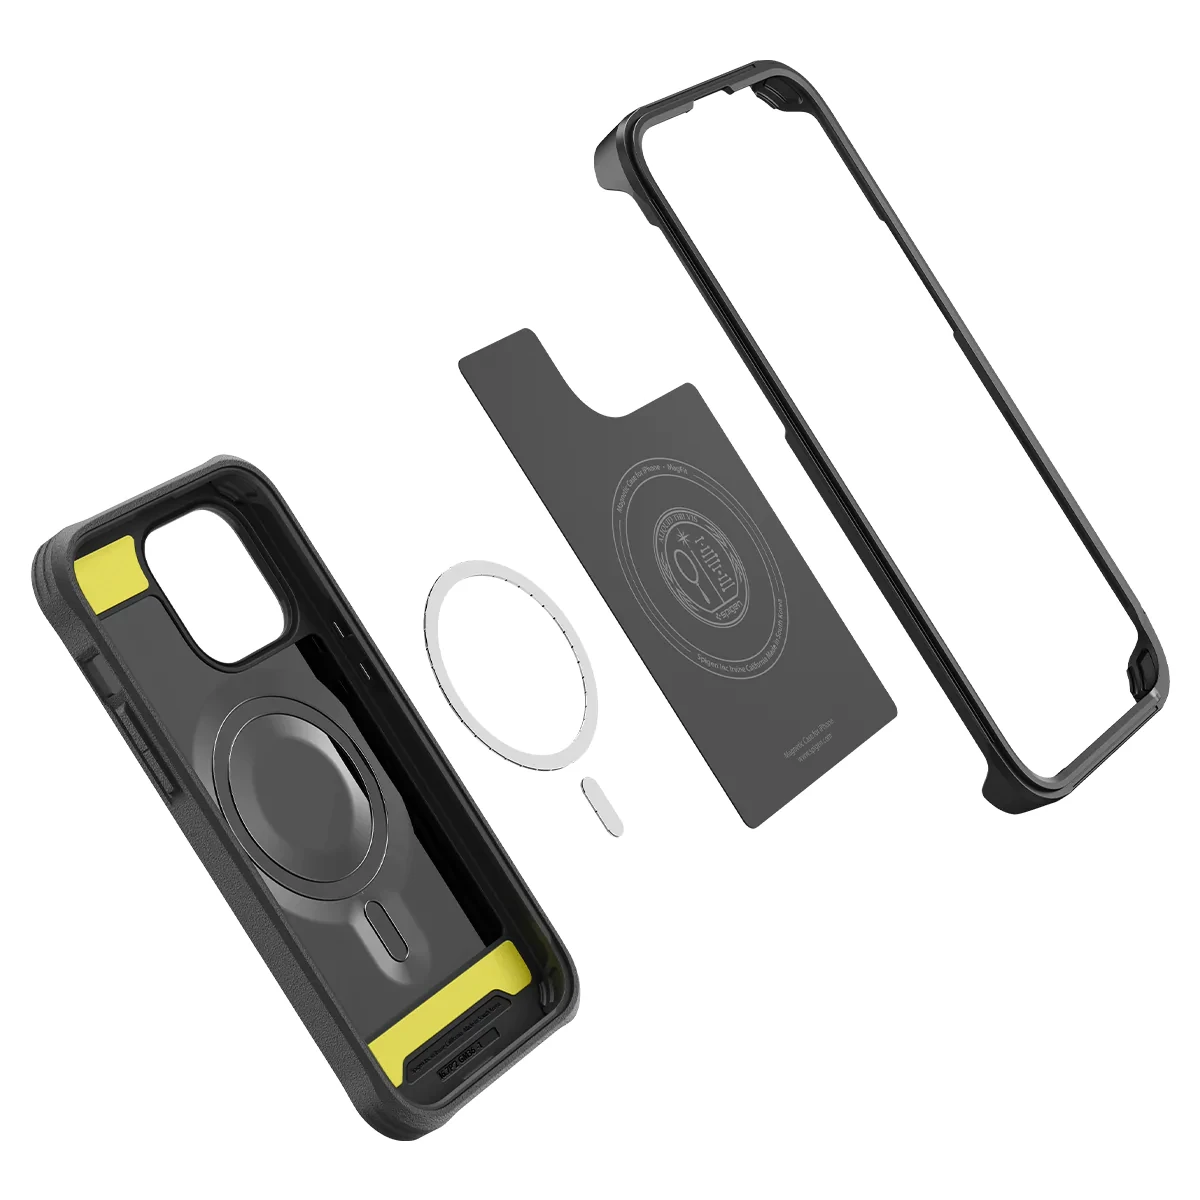 Чохол Spigen для iPhone 14 Pro Case Geo Armor 360 (MagFit), Black (ACS04997)